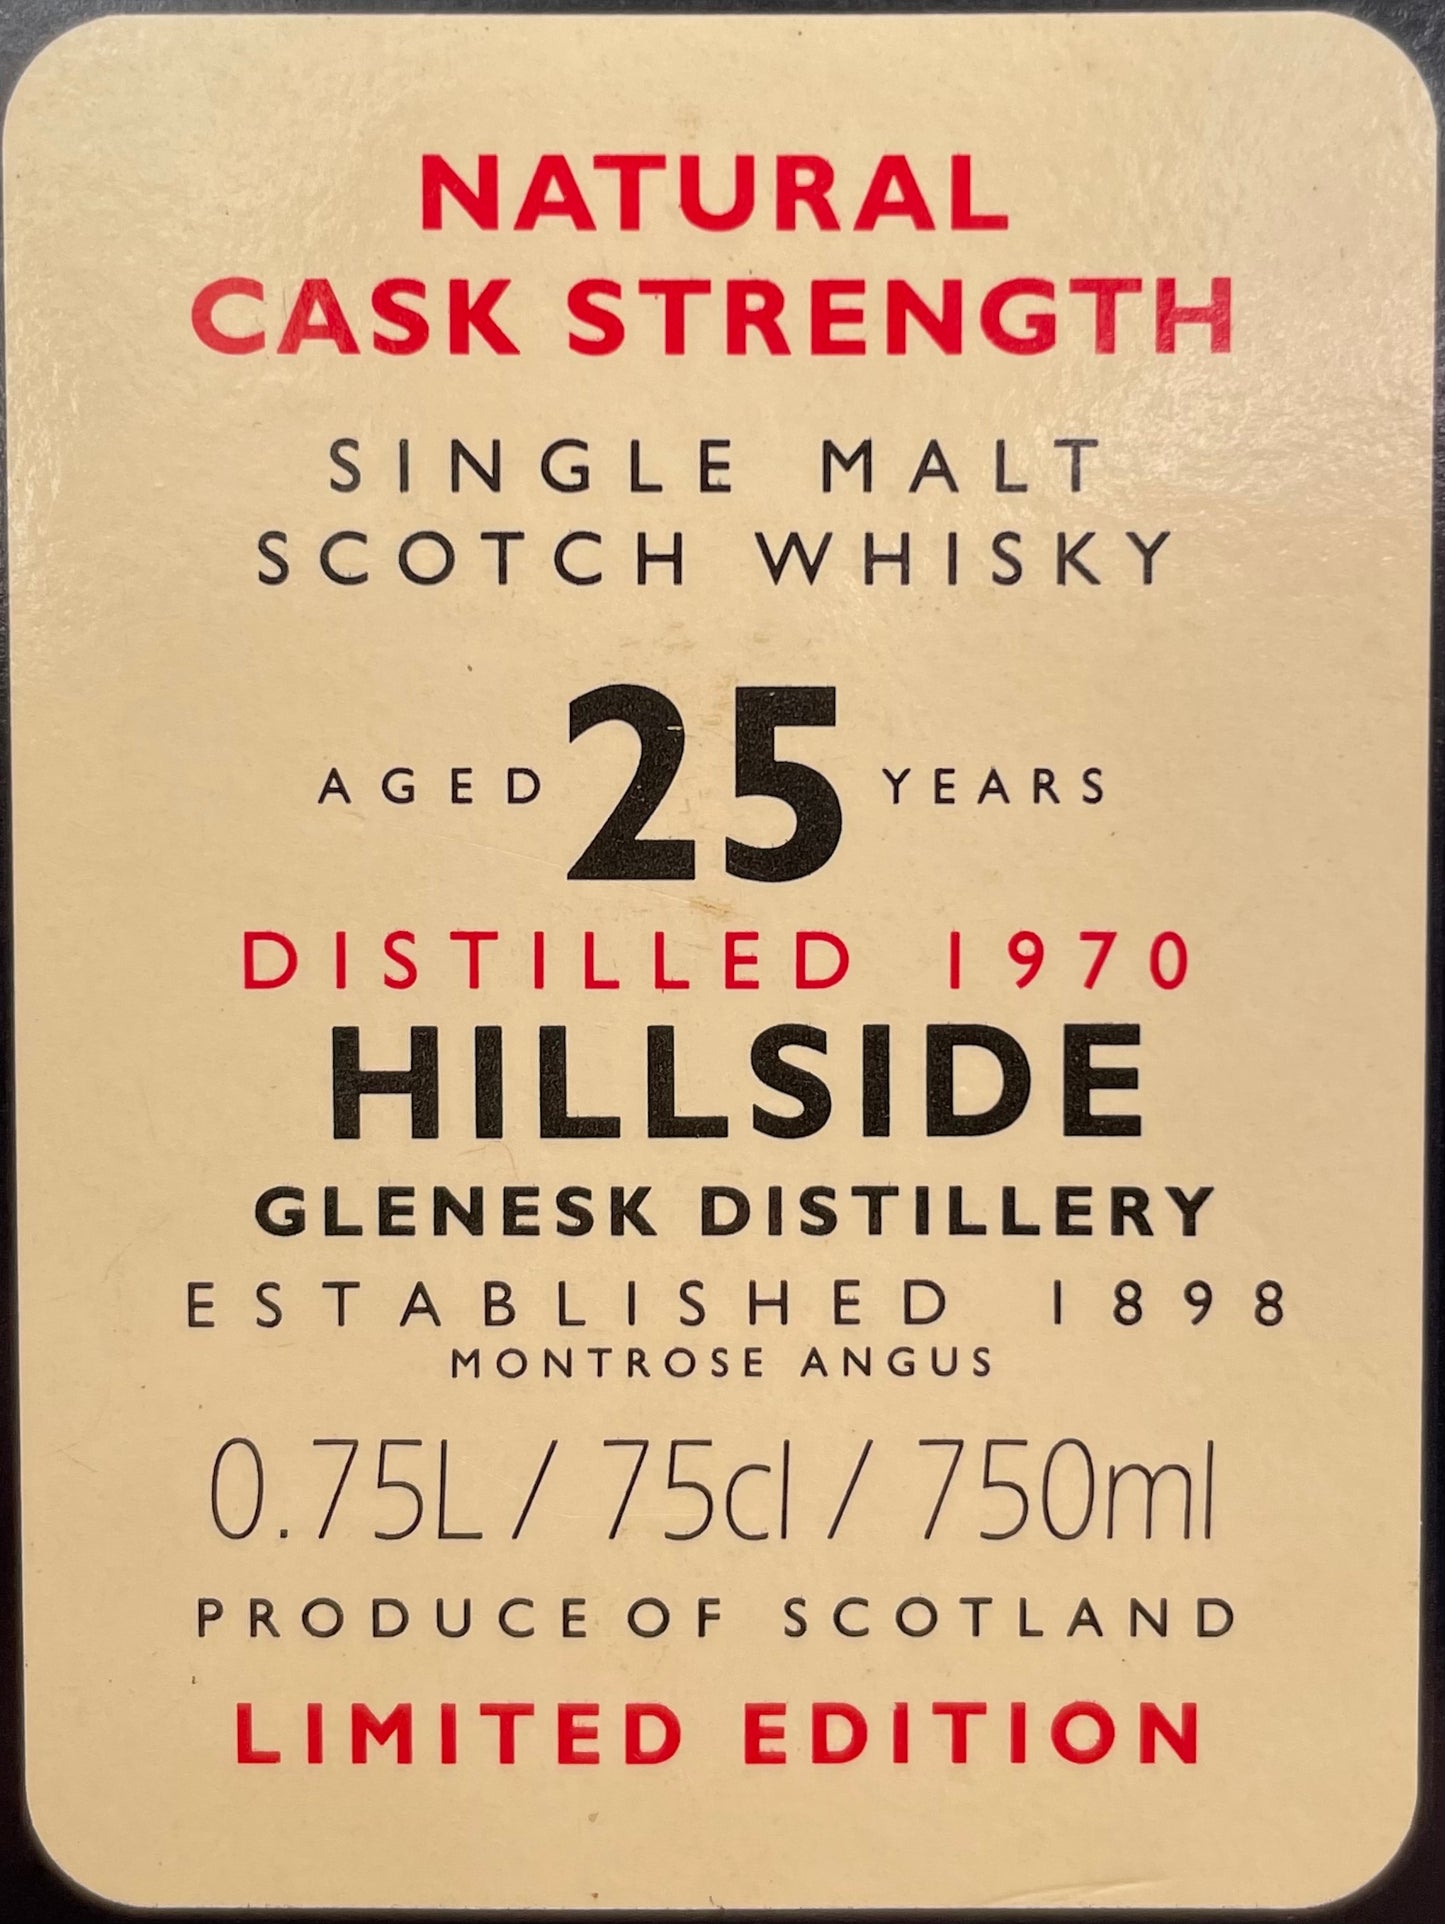 Hillside 25 Jahre Rare Malt Whisky